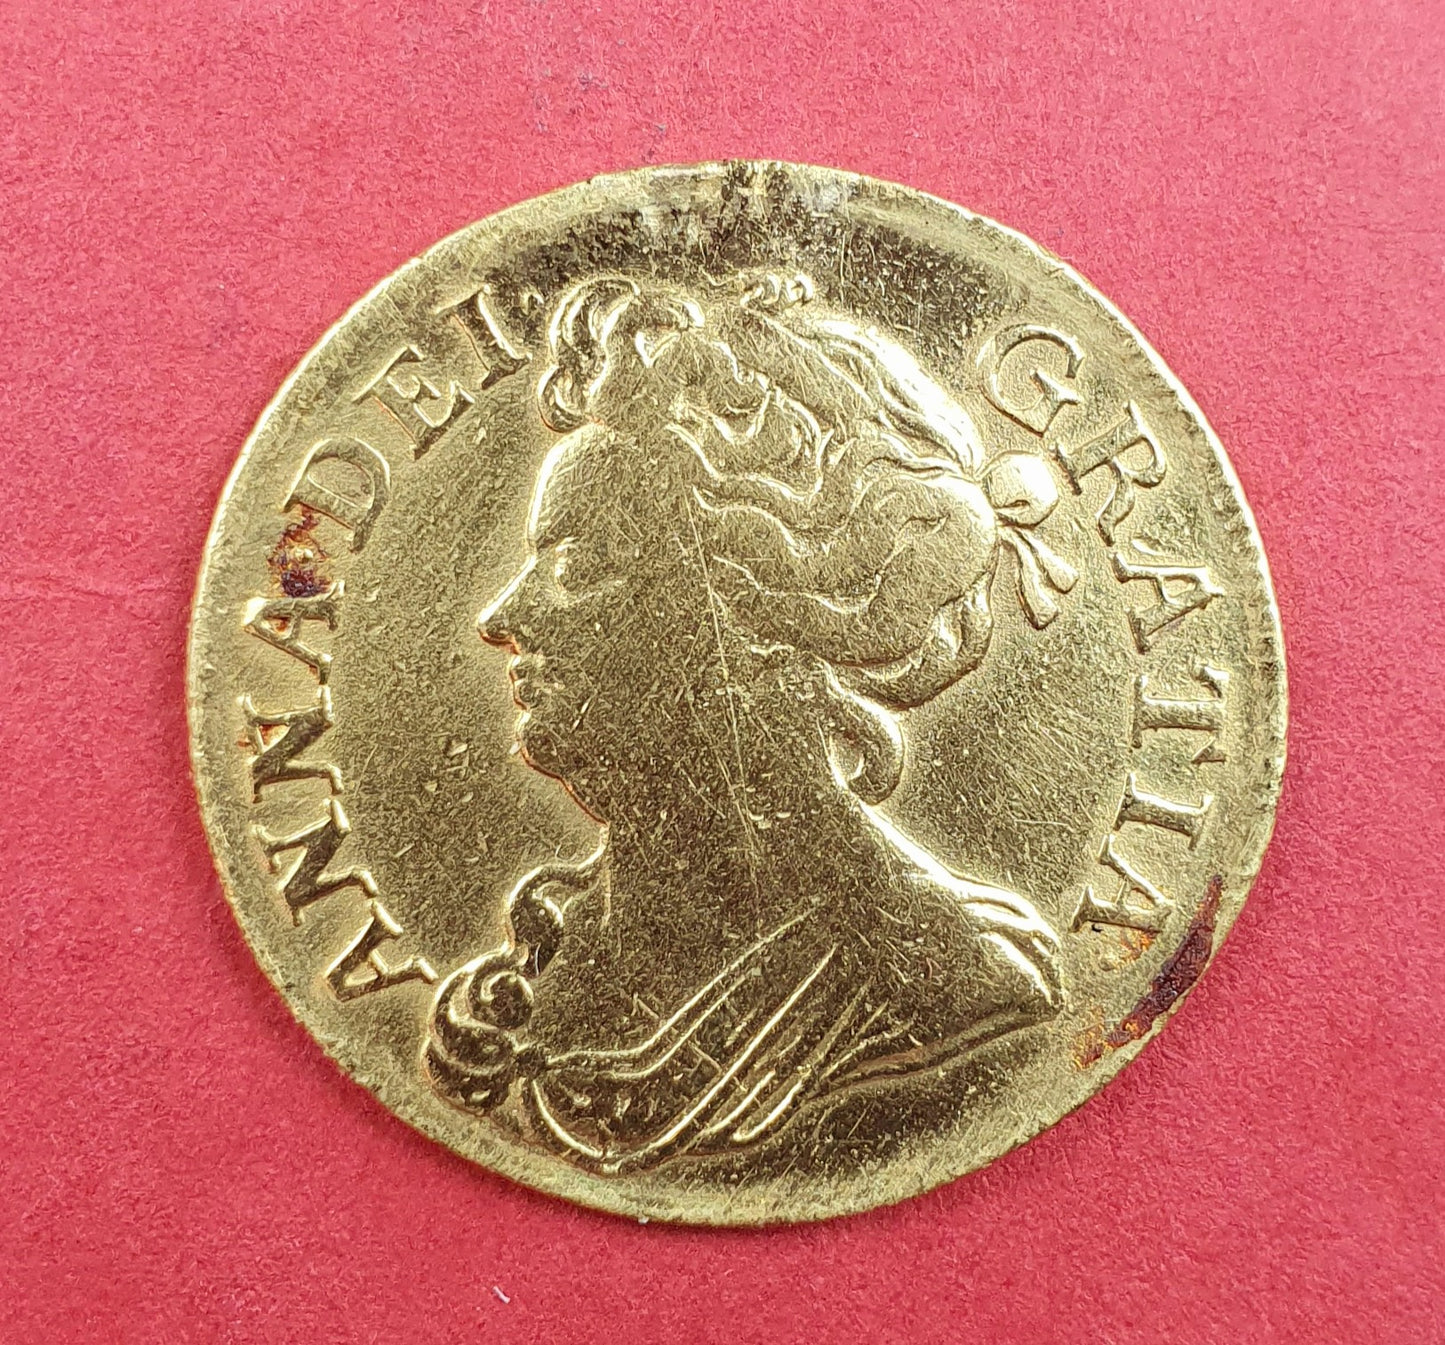 Queen Gold Guinea, 1708